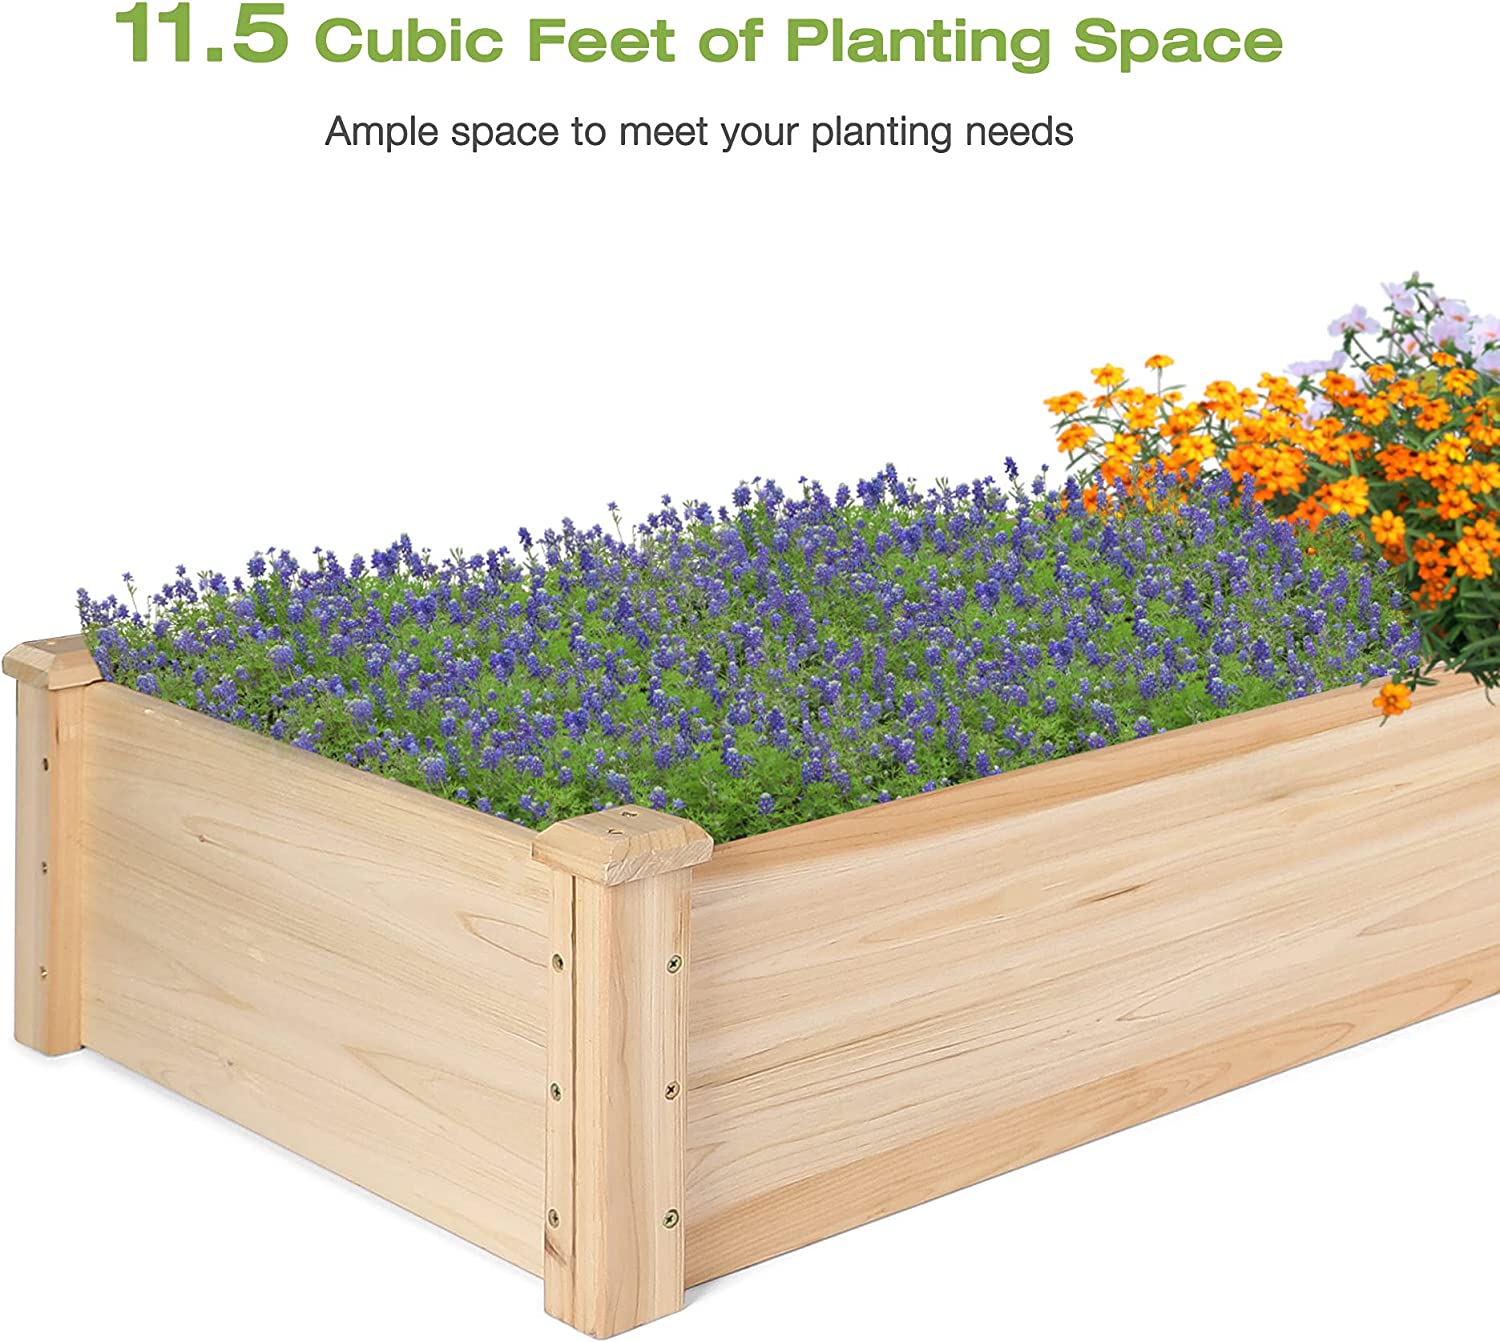 Raised Garden Bed 8 x 2 Ft Outdoor Natural Fir Wood Elevated Planter Garden Box for Vegetable Flower Herb